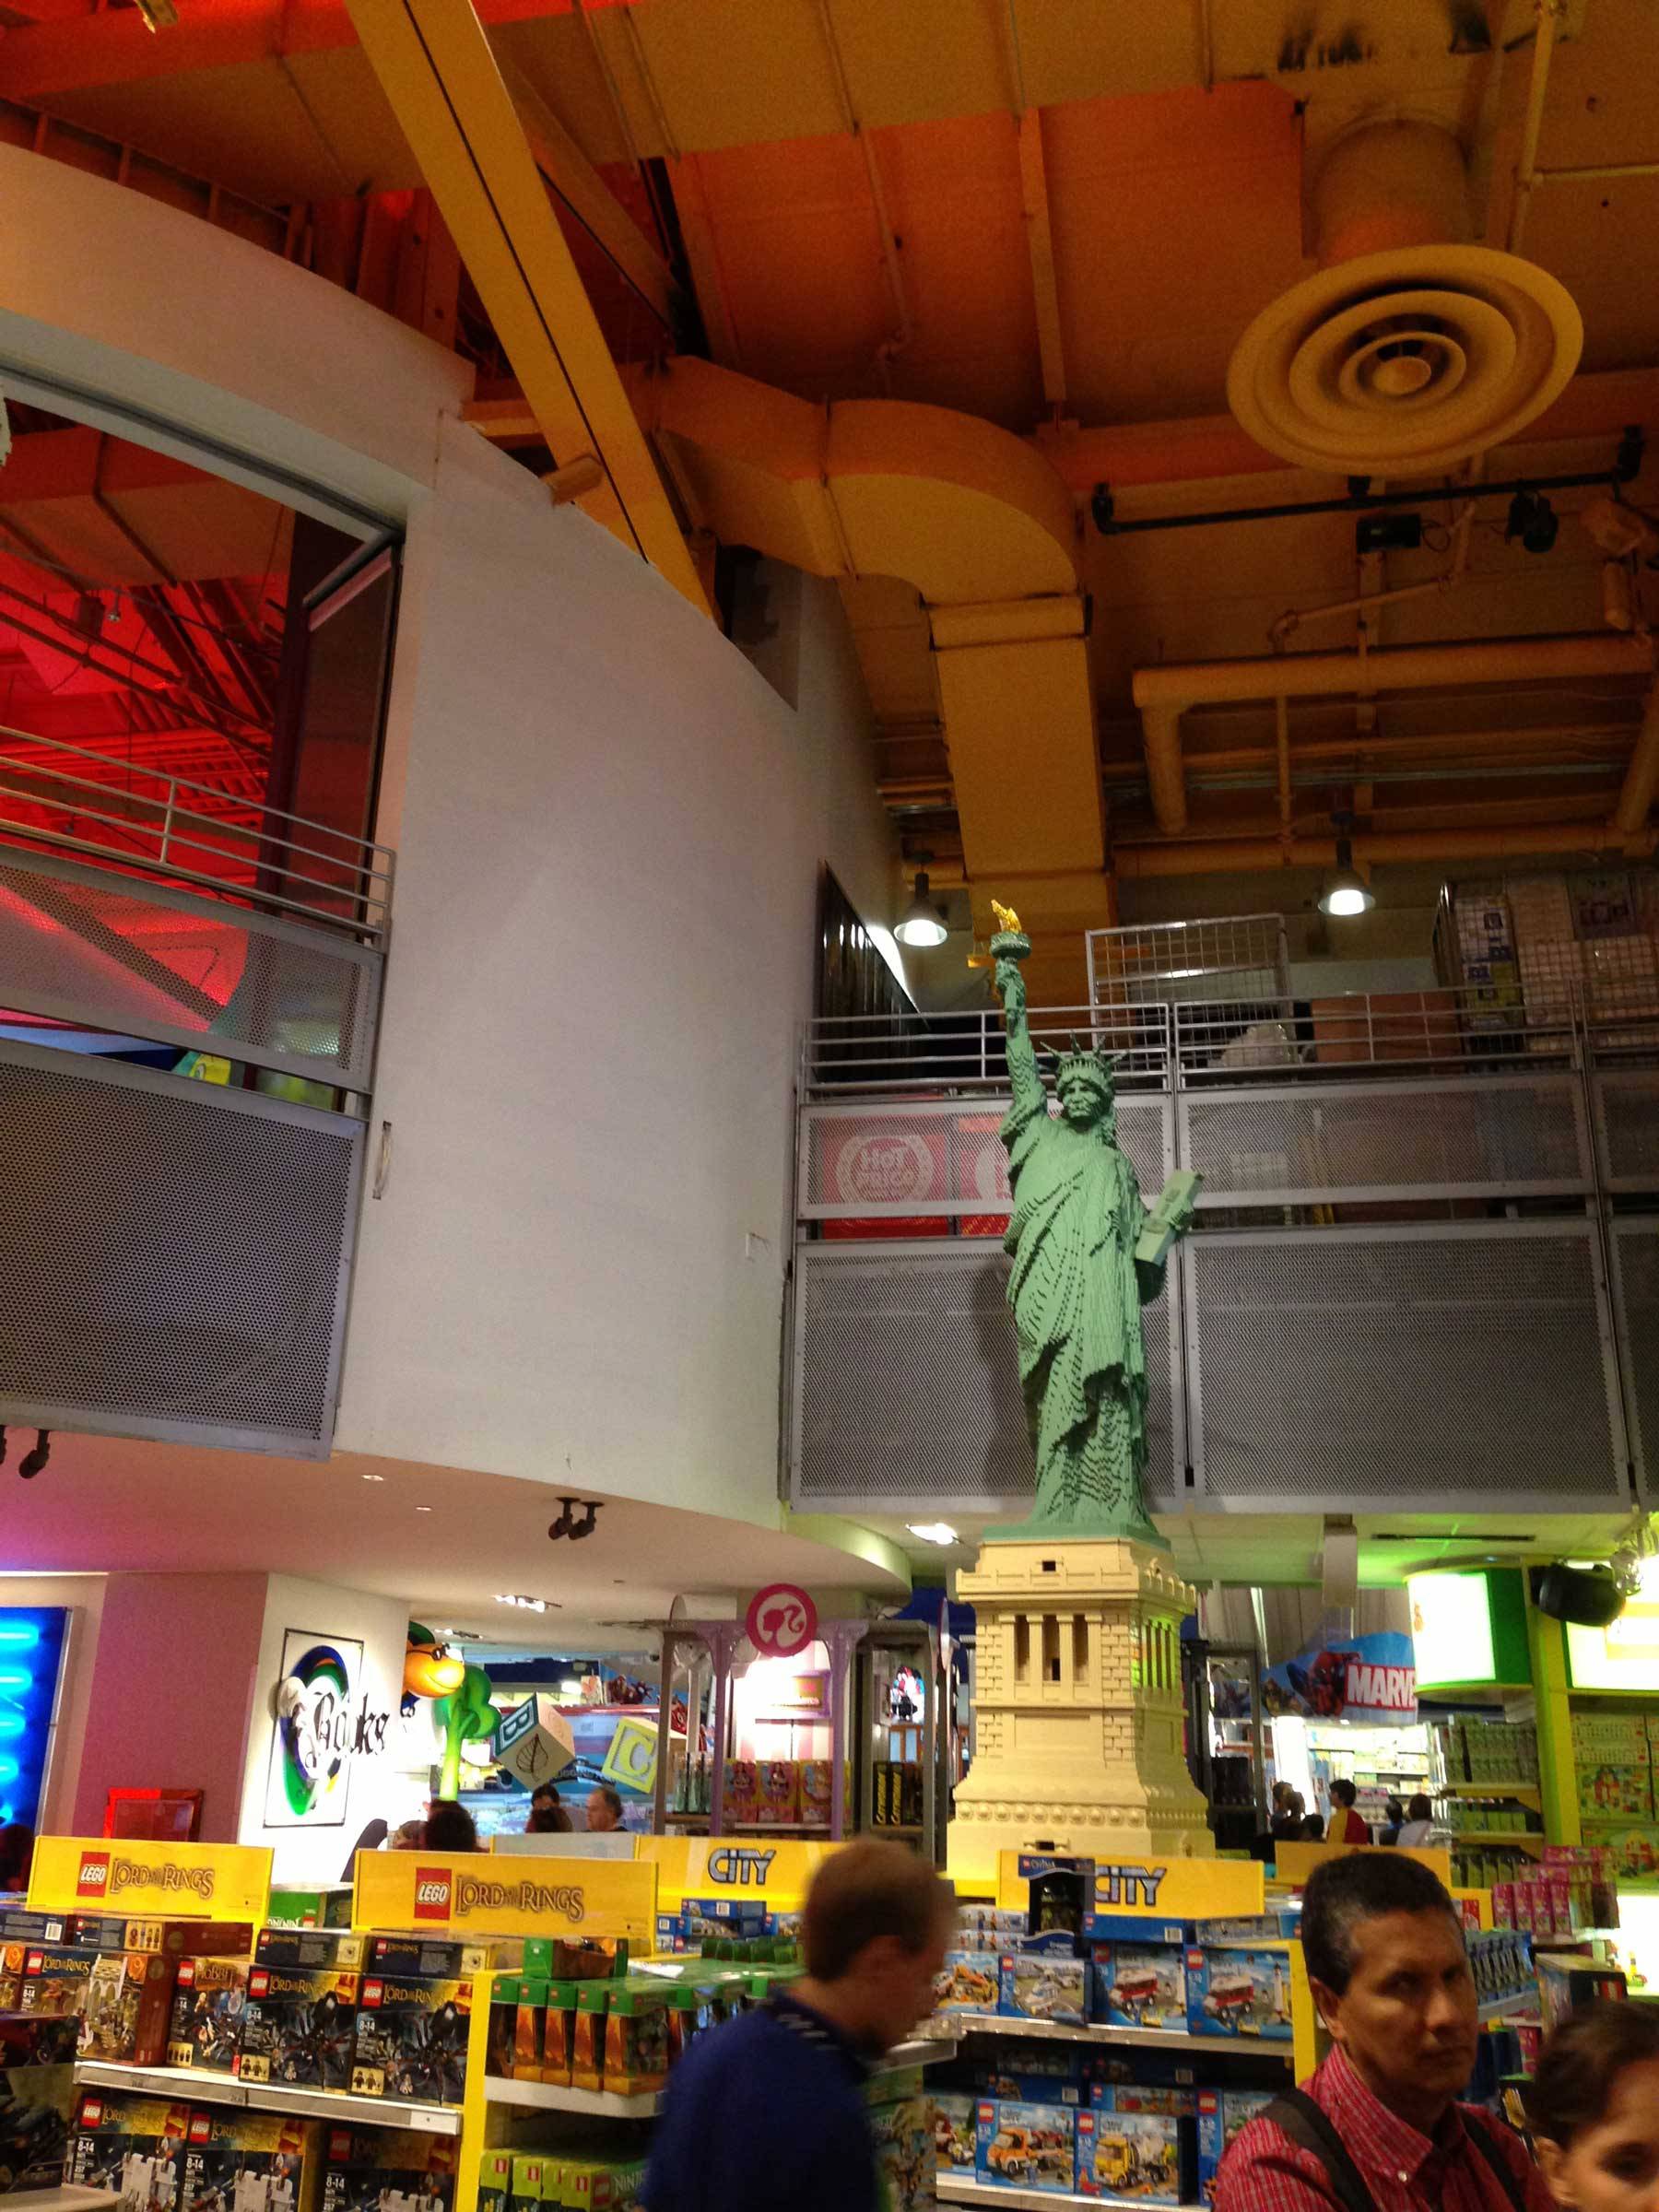 LEGO Statue of Liberty